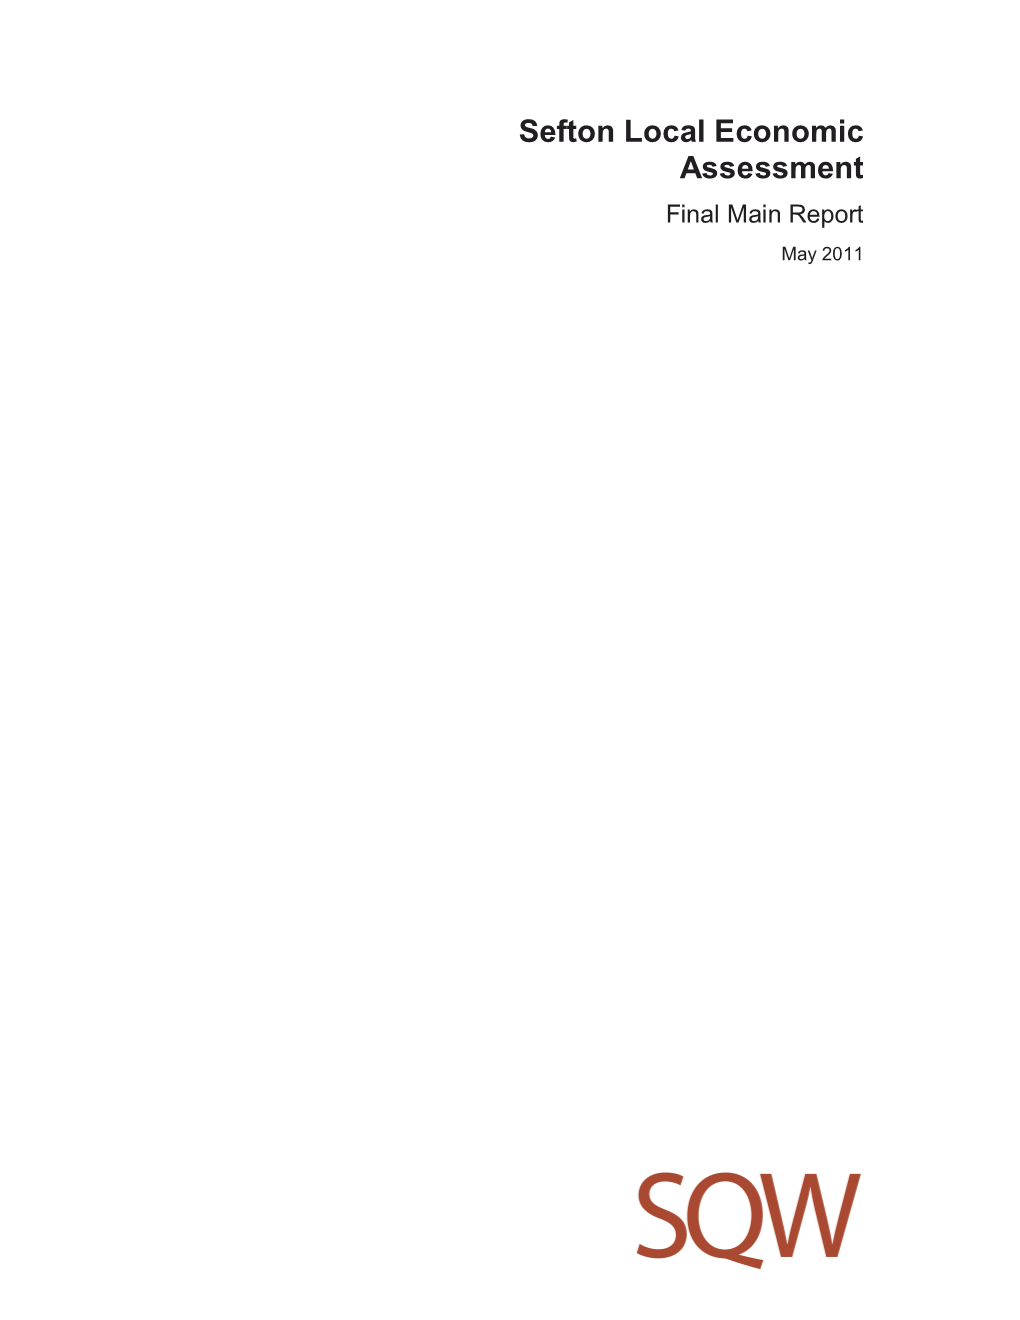 Sefton Local Economic Assessment Final Main Report May 2011